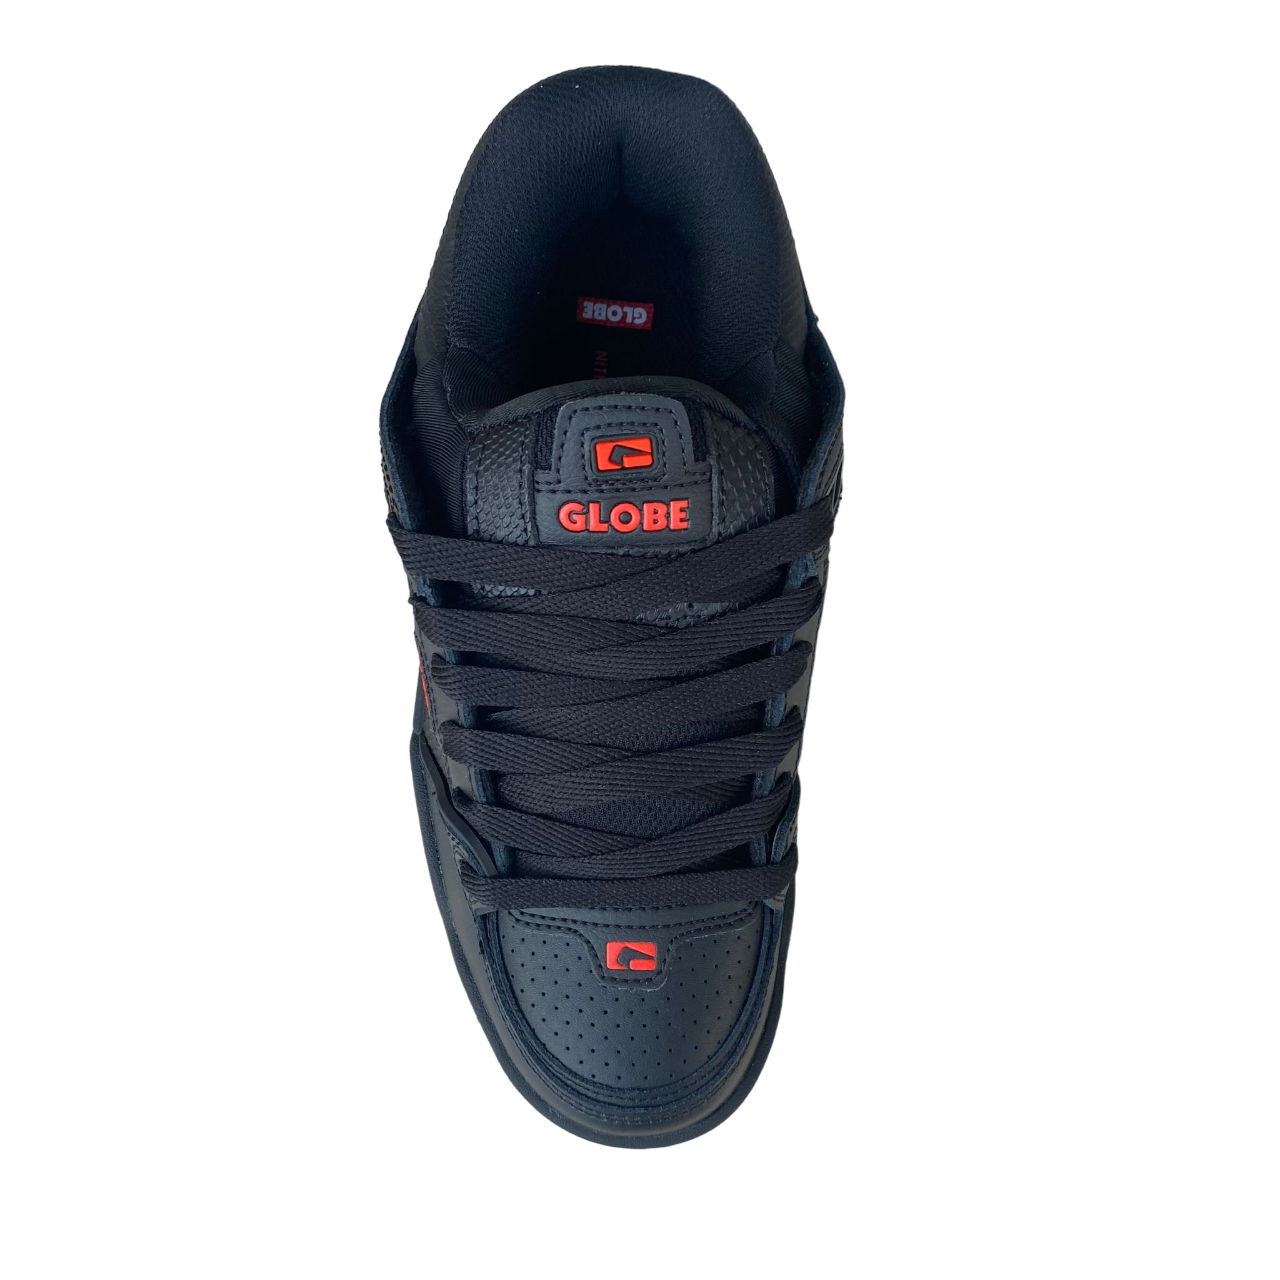 Globe Fusion GBFUS 20597 black-red skateboard sneakers shoe